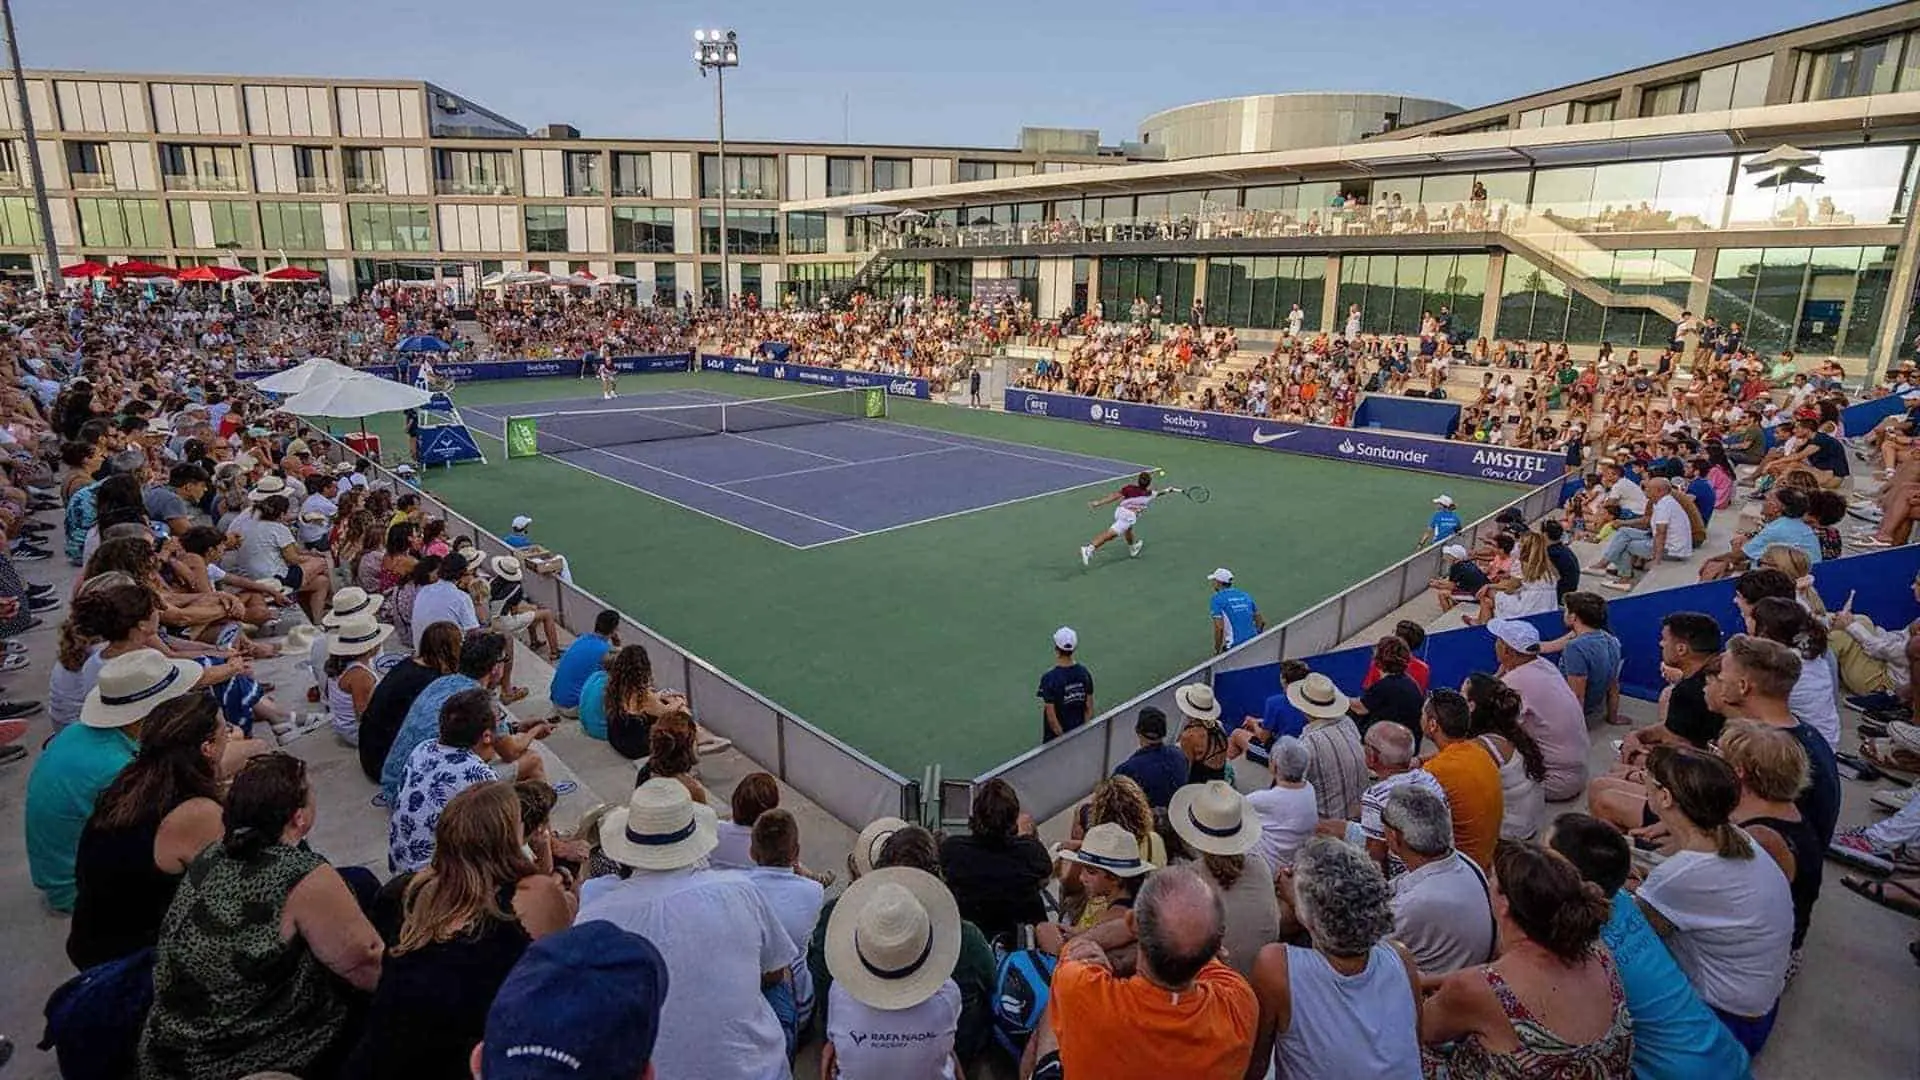 House Image of Mallorca Open: Un Escenario de Clase Mundial para el Tenis